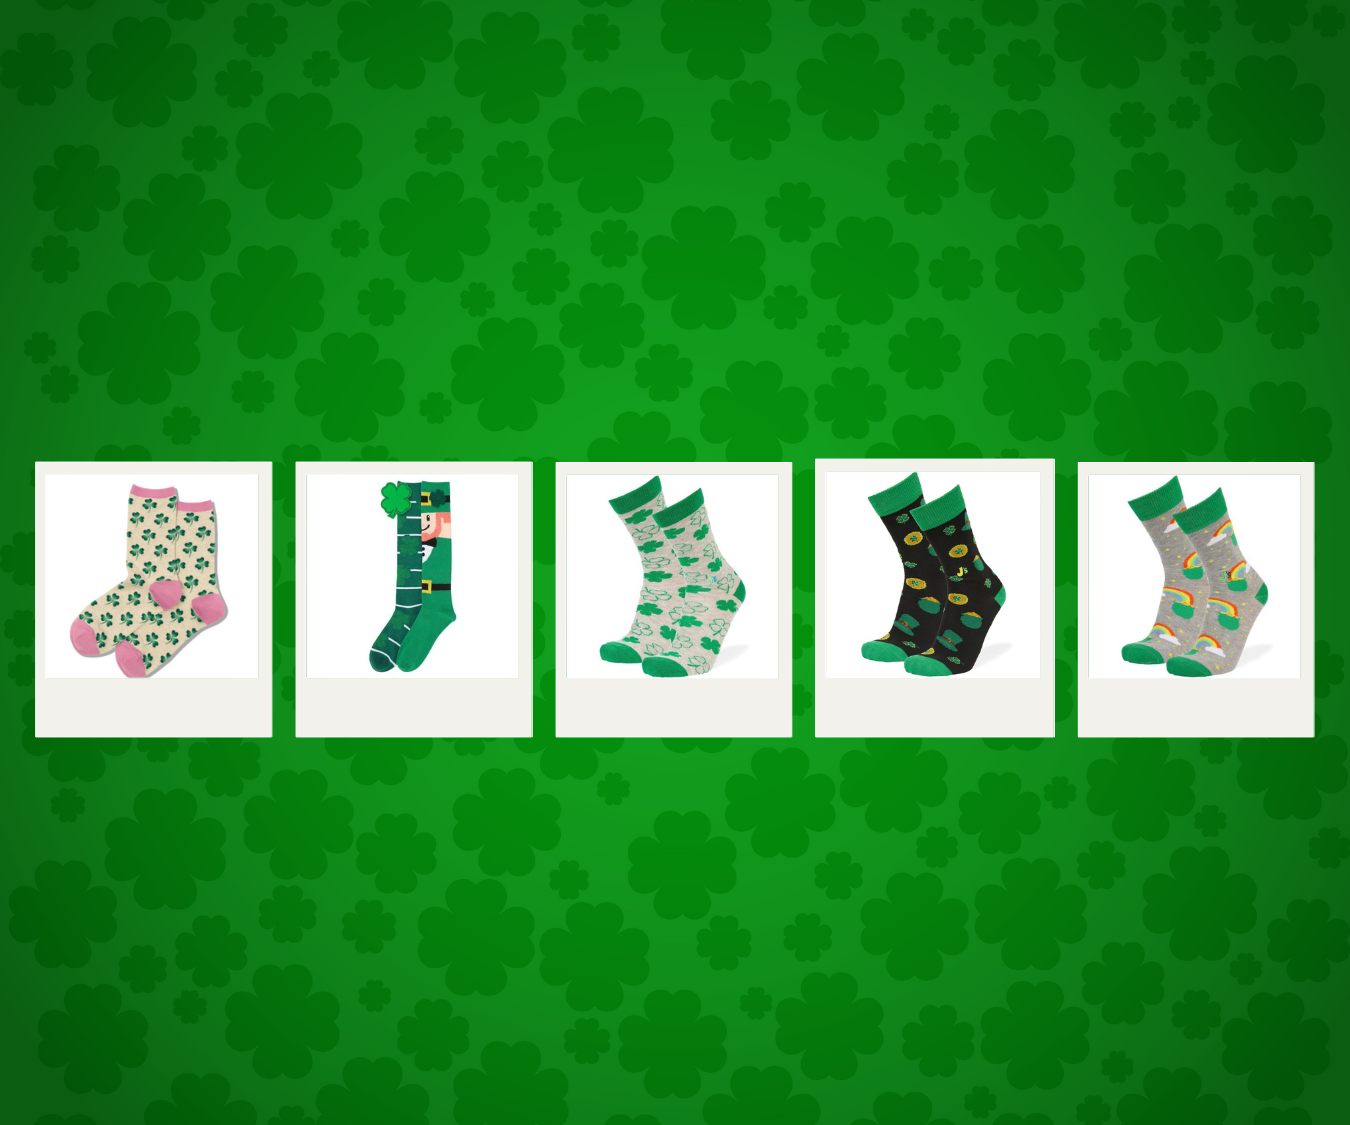 5 Lucky Socks to Wear on St. Patrick's Day